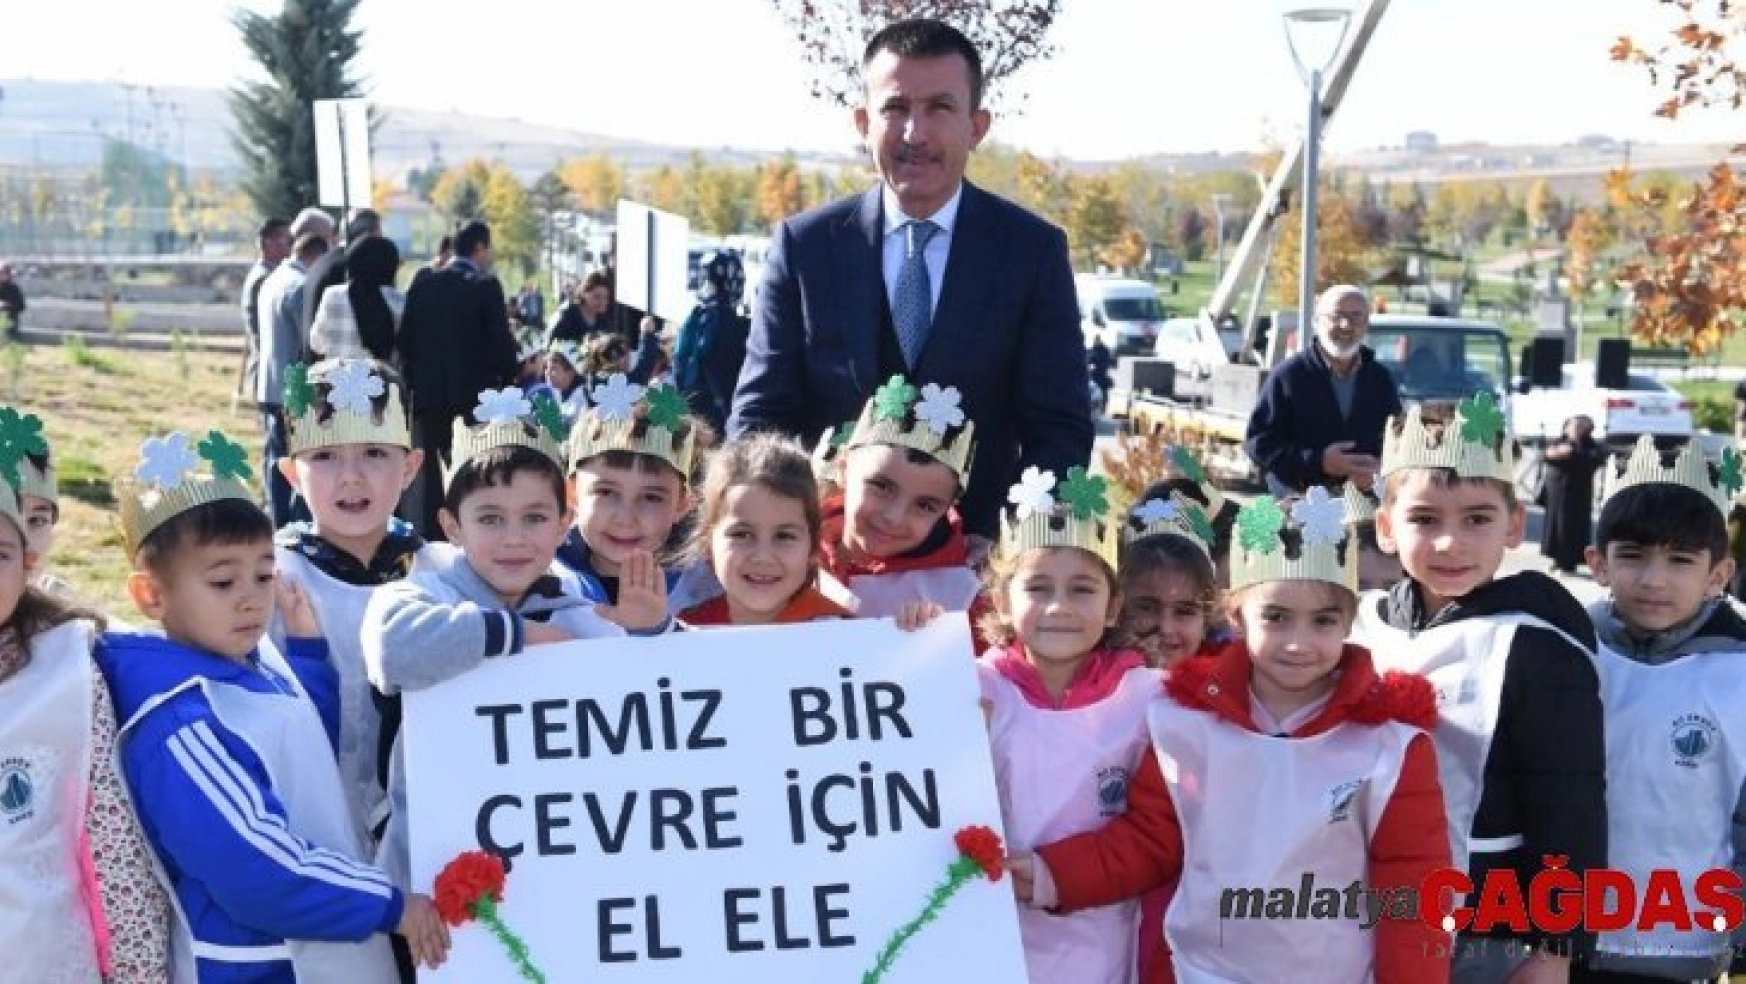 Ankara'ya nefes, çocuklara meyve